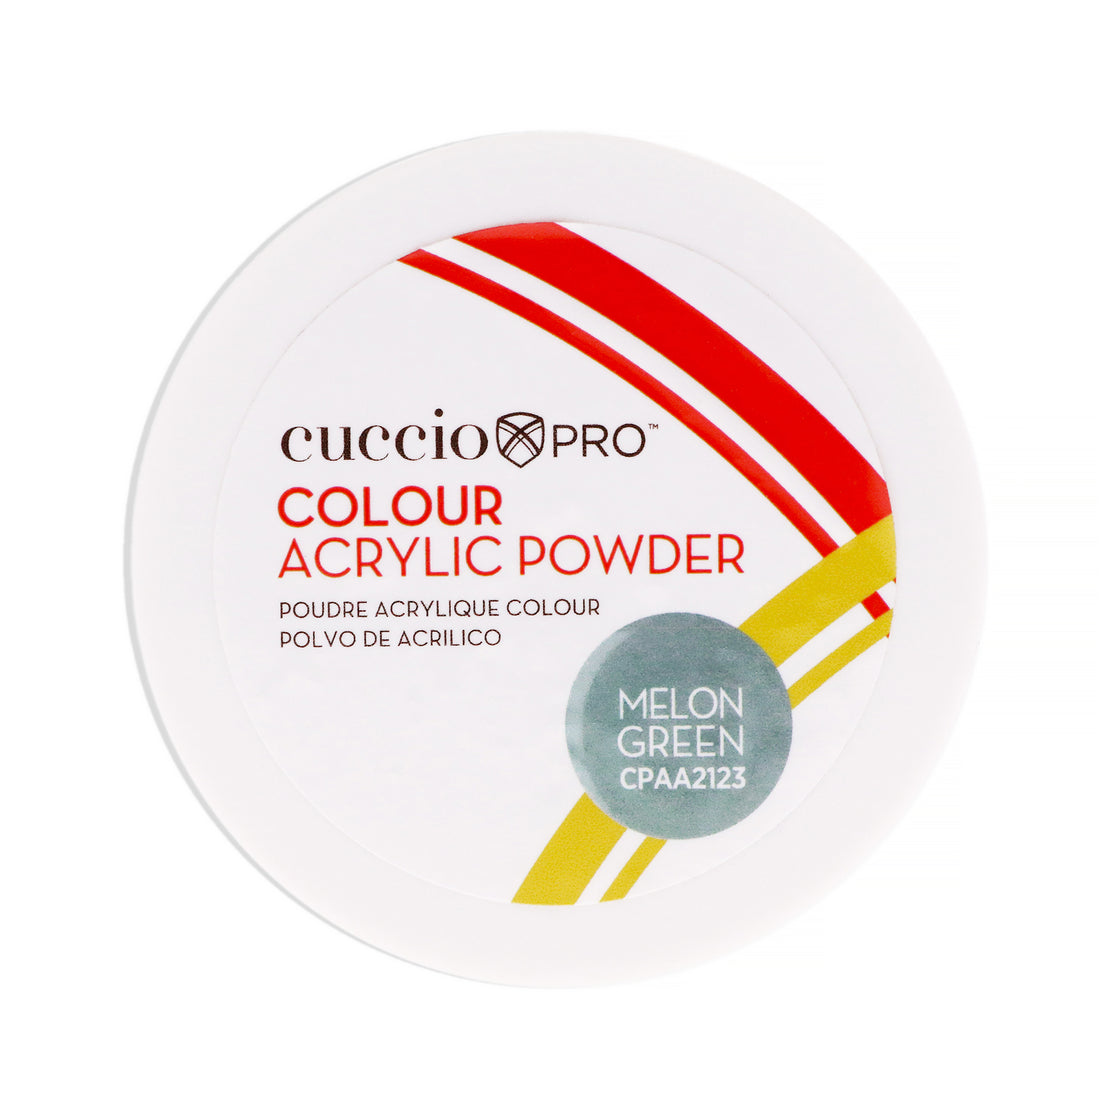 Colour Acrylic Powder - Melon Green by Cuccio PRO for Women - 1.6 oz Acrylic Powder